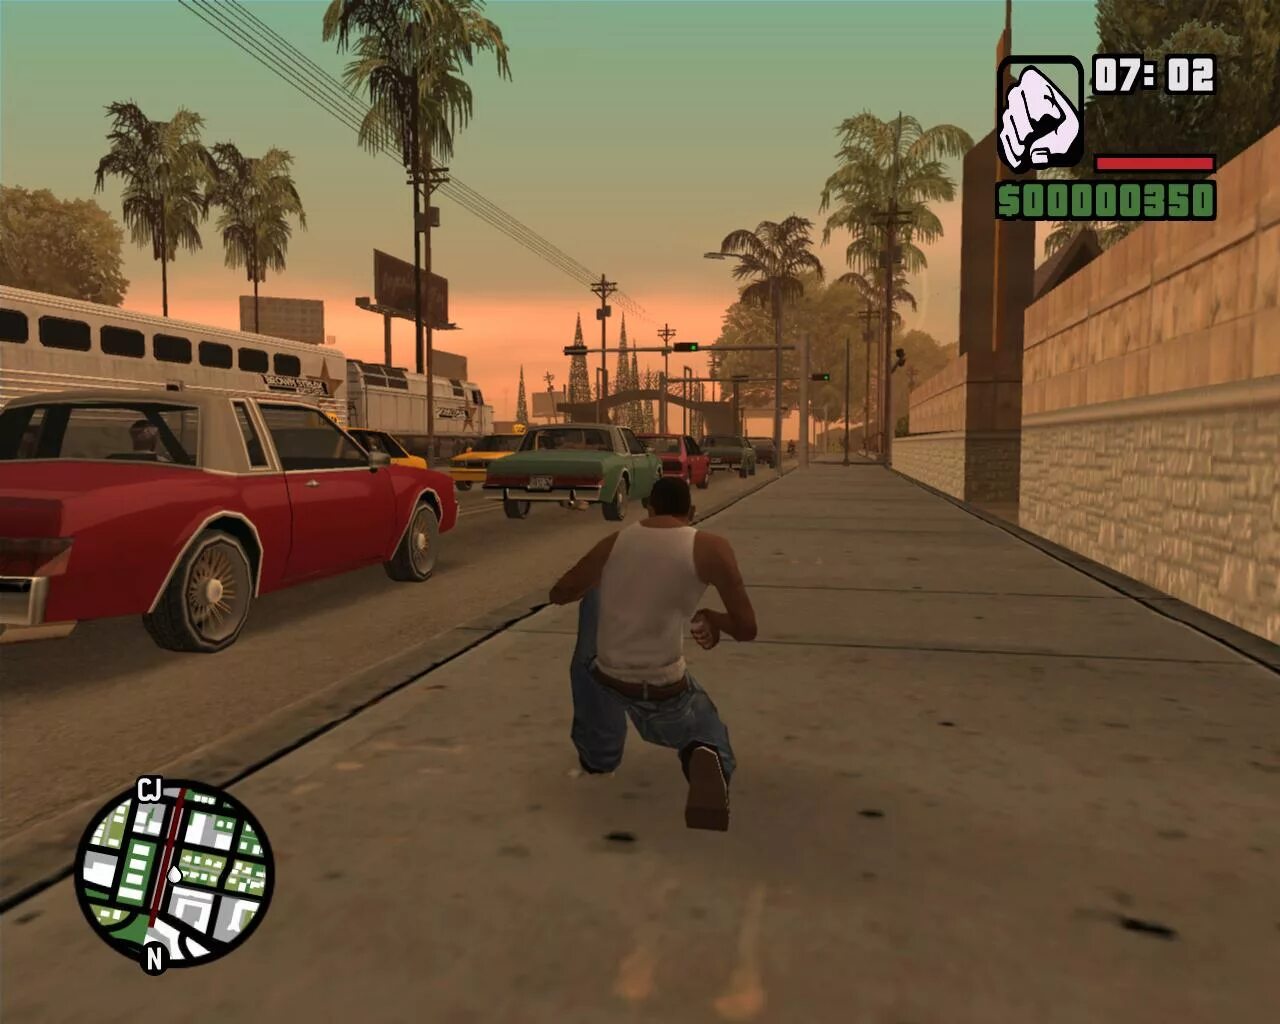 Gta san andreas на playstation. GTA San Andreas ps2. Grand Theft auto San Andreas ps2. GTA San Andreas ps2 Disk. ГТА Сан андреас 2 ps2.